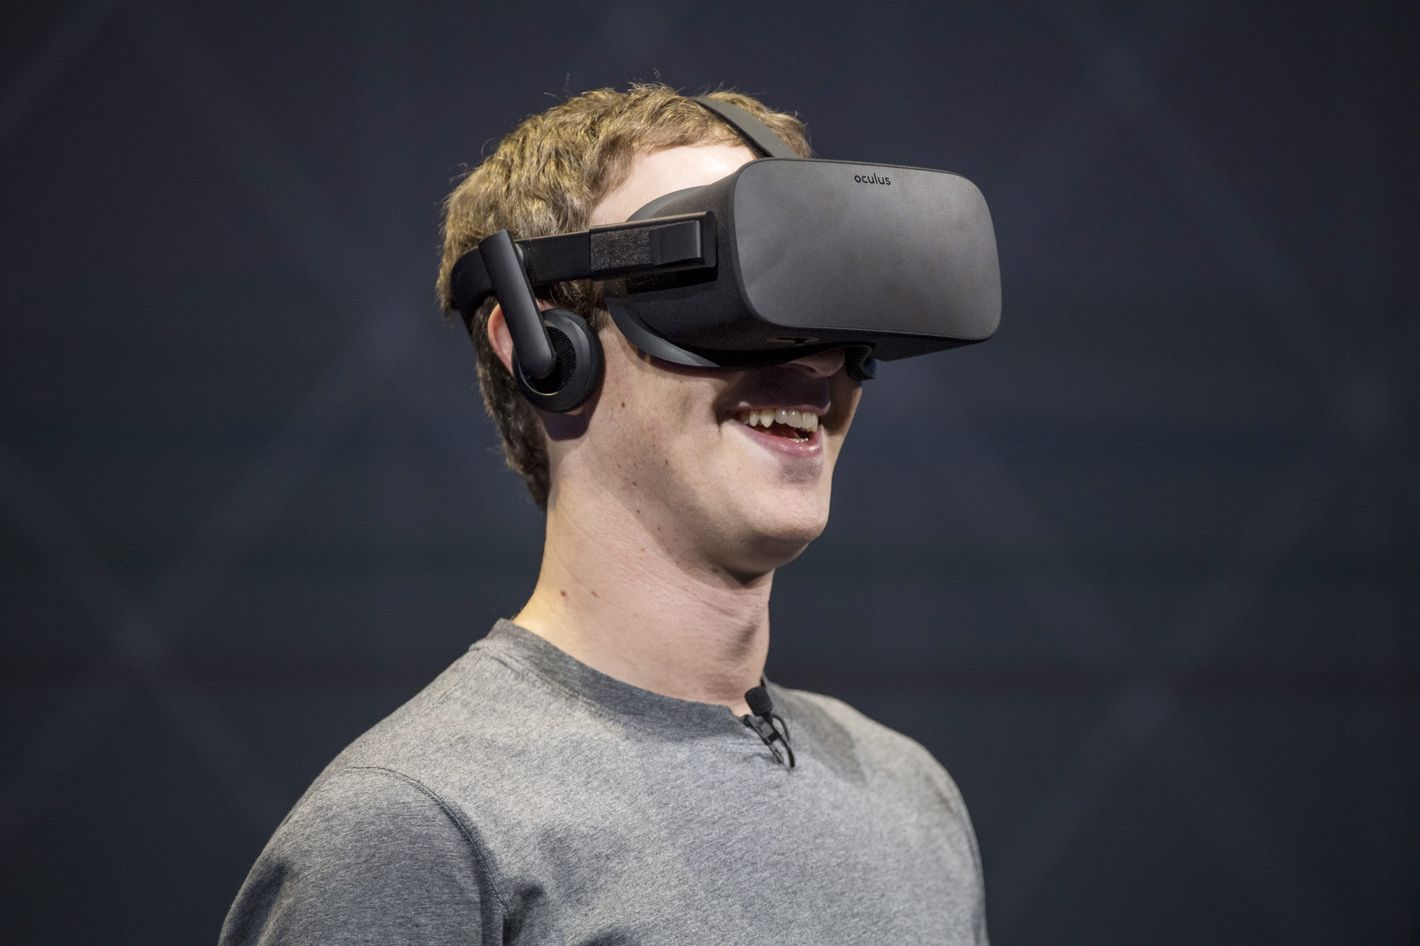 Best Announcement From Facebook Oculus VR Event